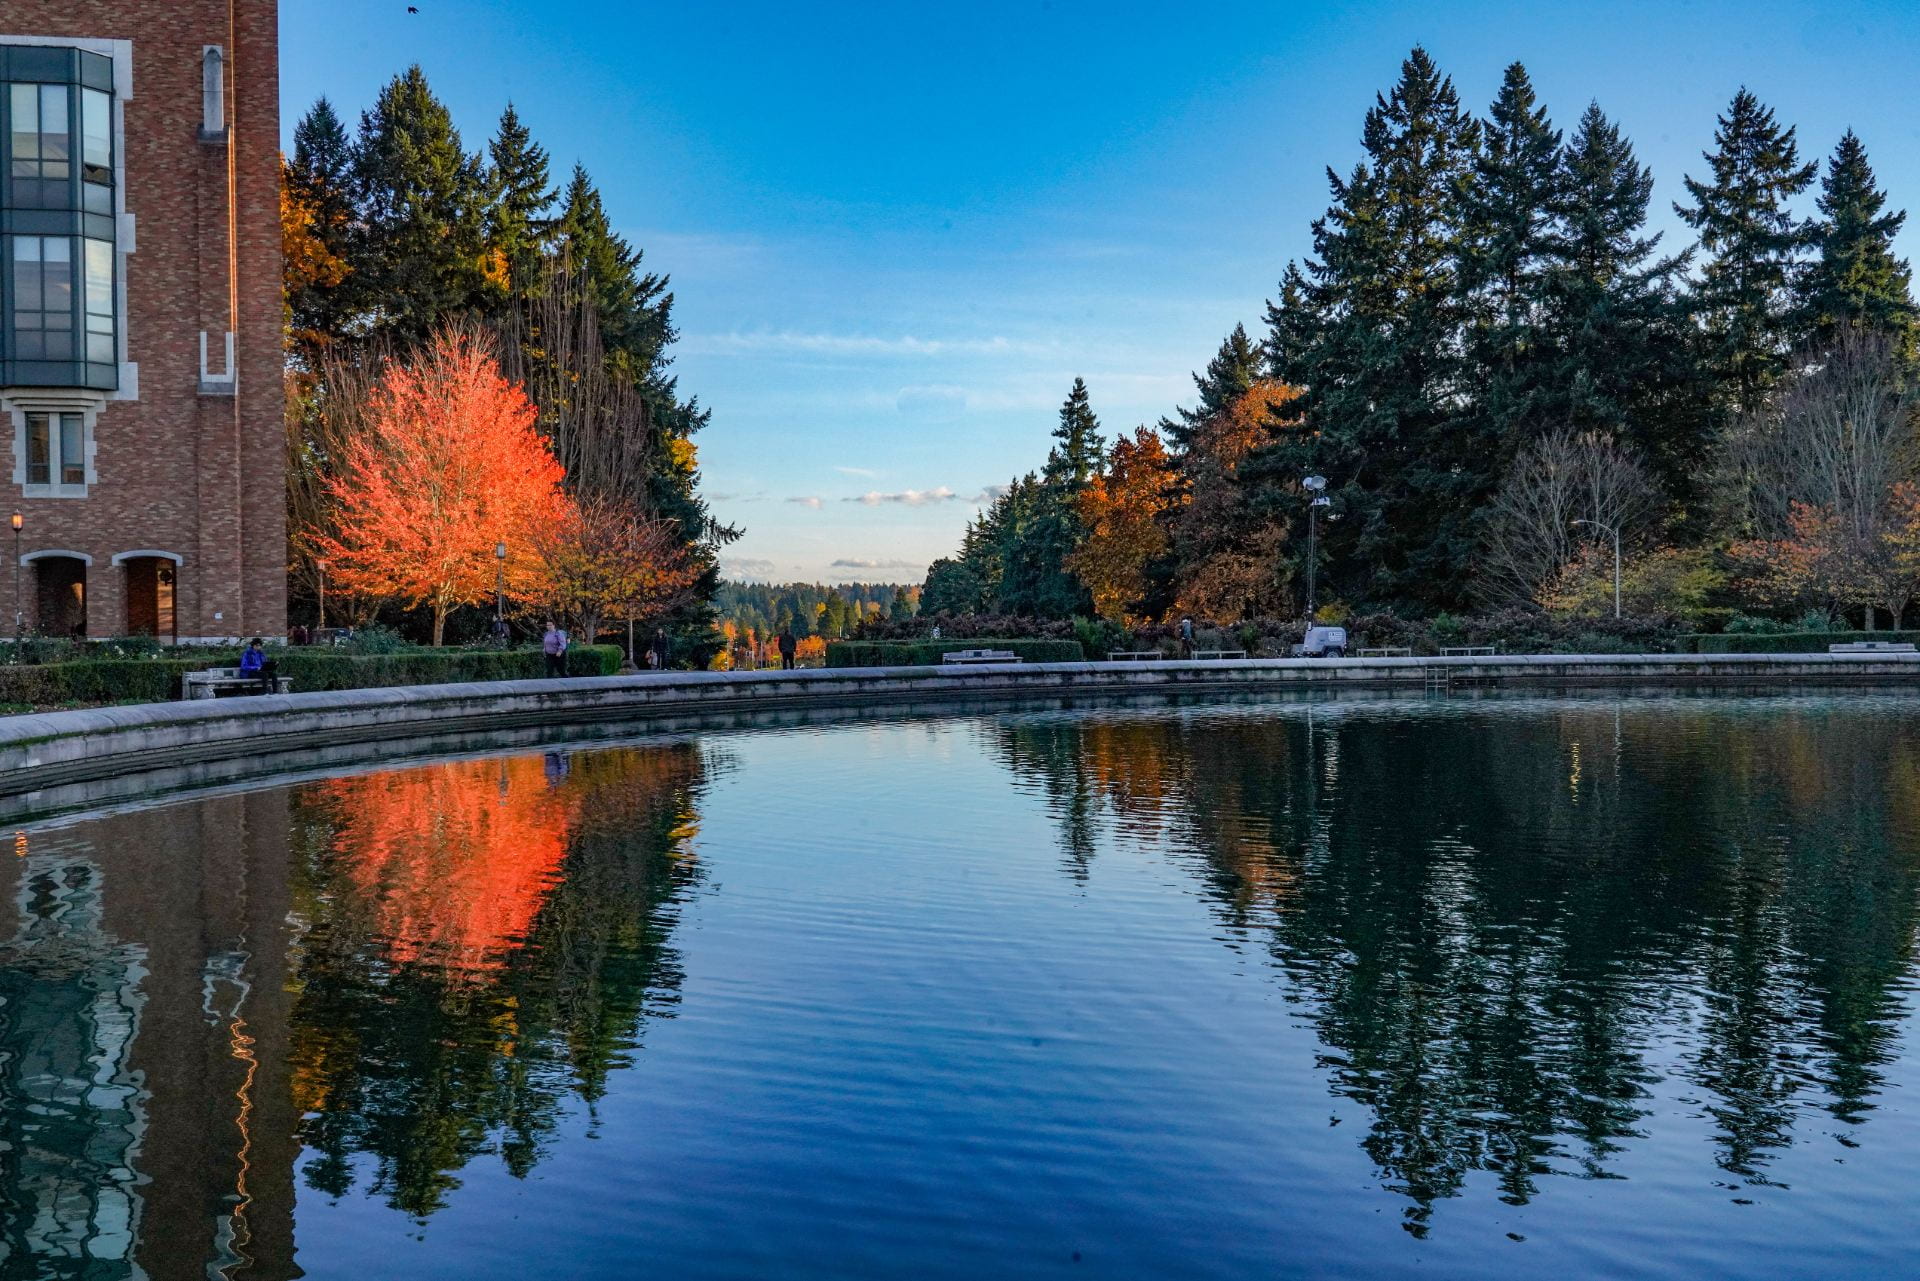 Drumheller Fountain's pool looking south toward the Rainier Vista with evergreen trees amid fall foliage.